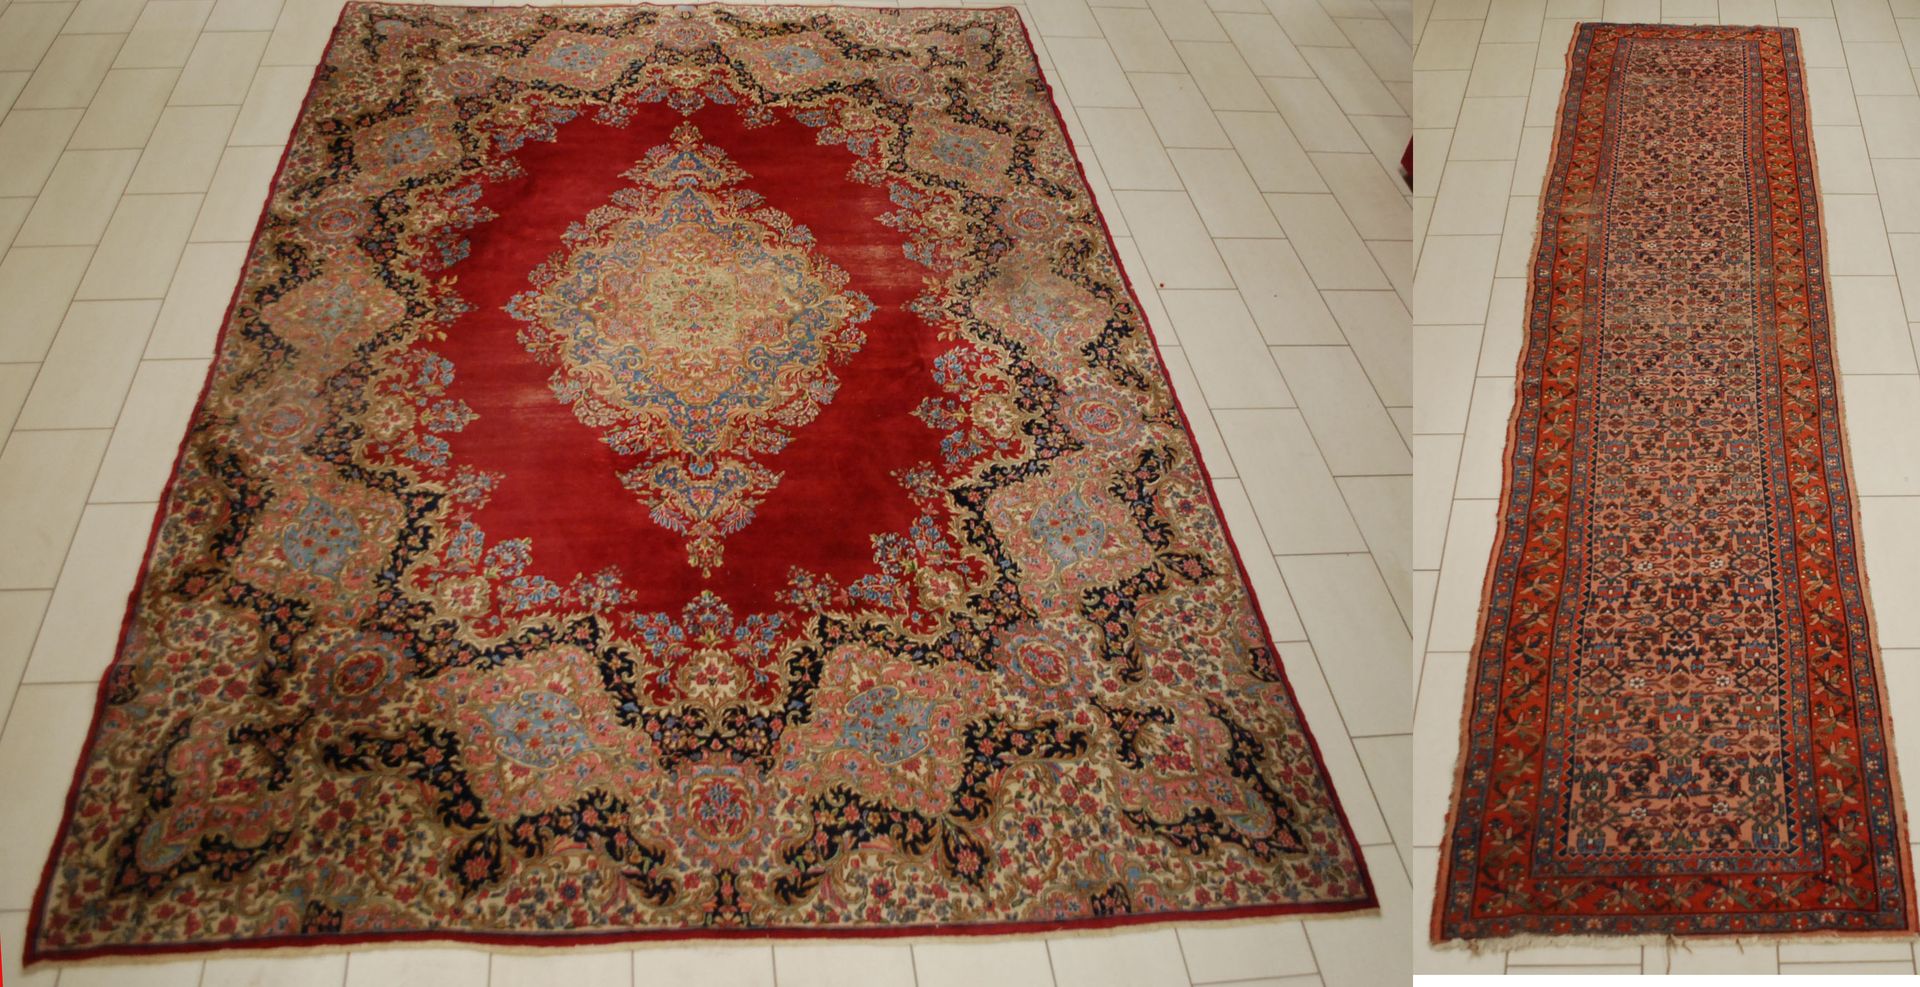 Tapis Mahal et Kirman. 地毯：这批地毯包括一张马哈尔走廊地毯（破旧）和一张柯曼地毯。

尺寸：491 x 115和423 x 296厘米。